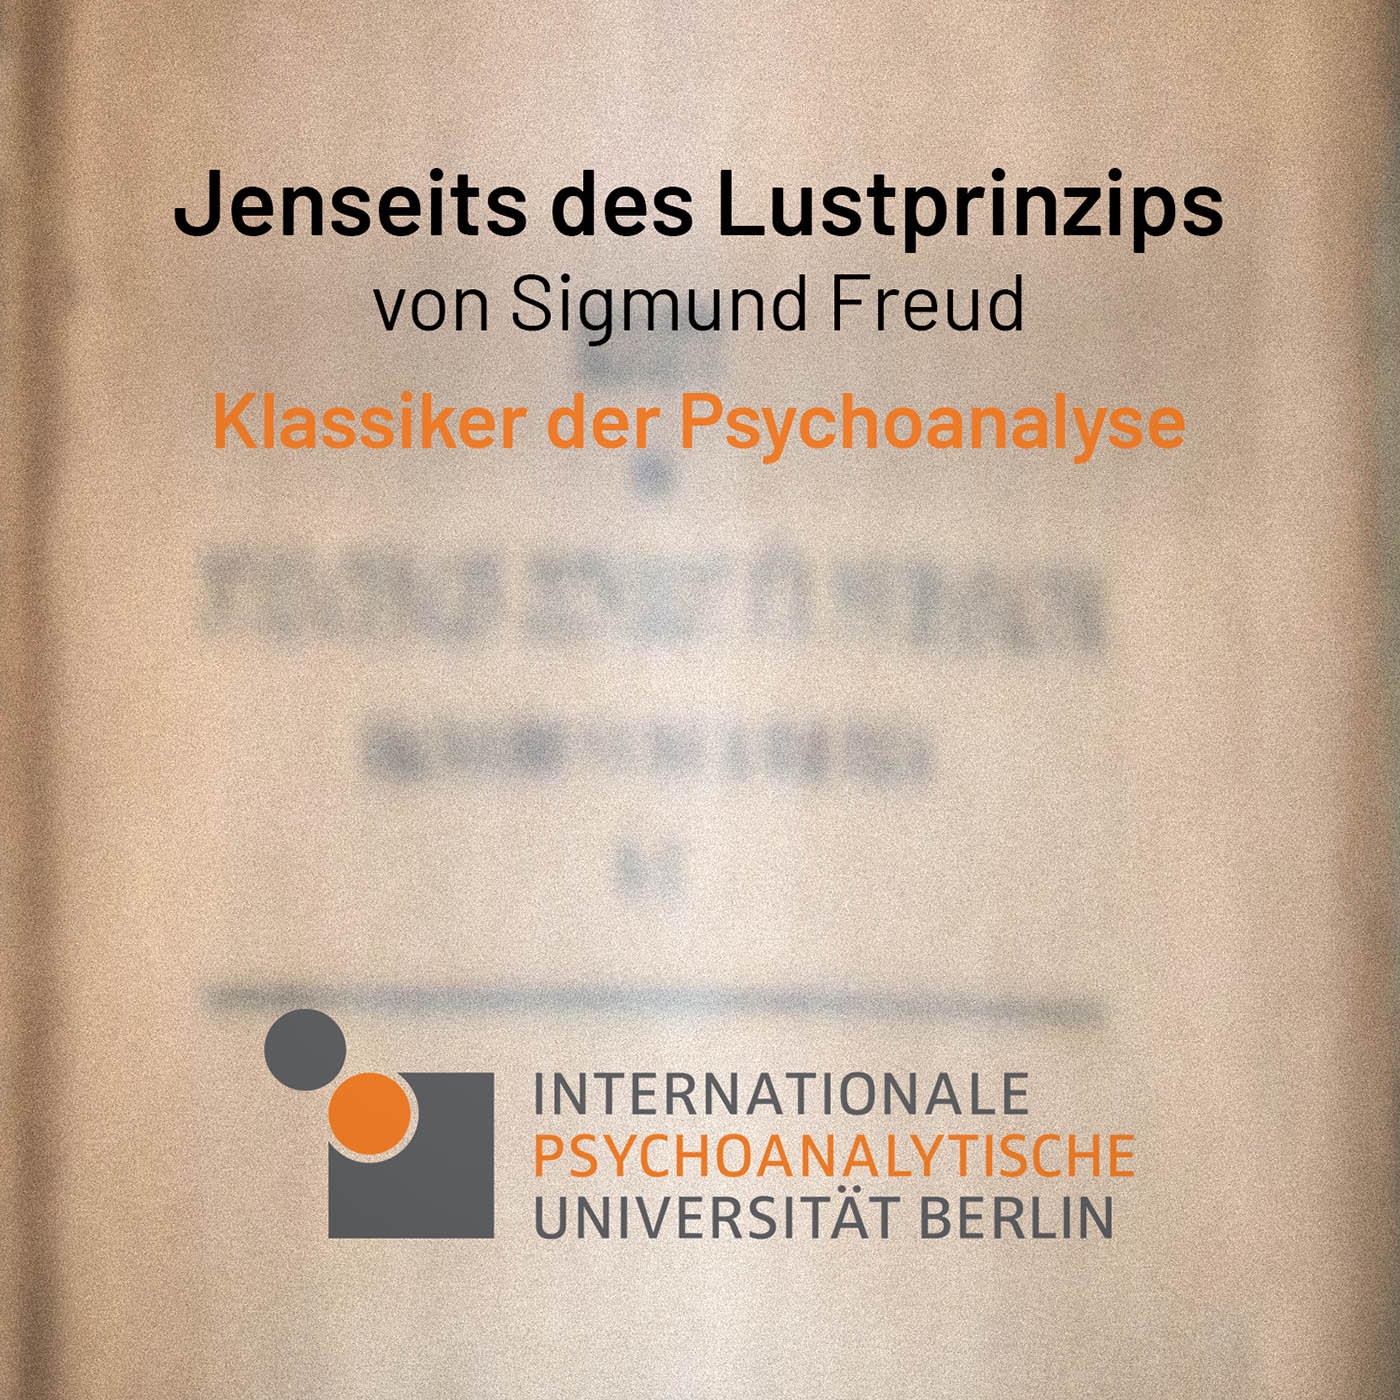 Klassiker der Psychoanalyse: Jenseits des Lustprinzips (Teil 2)